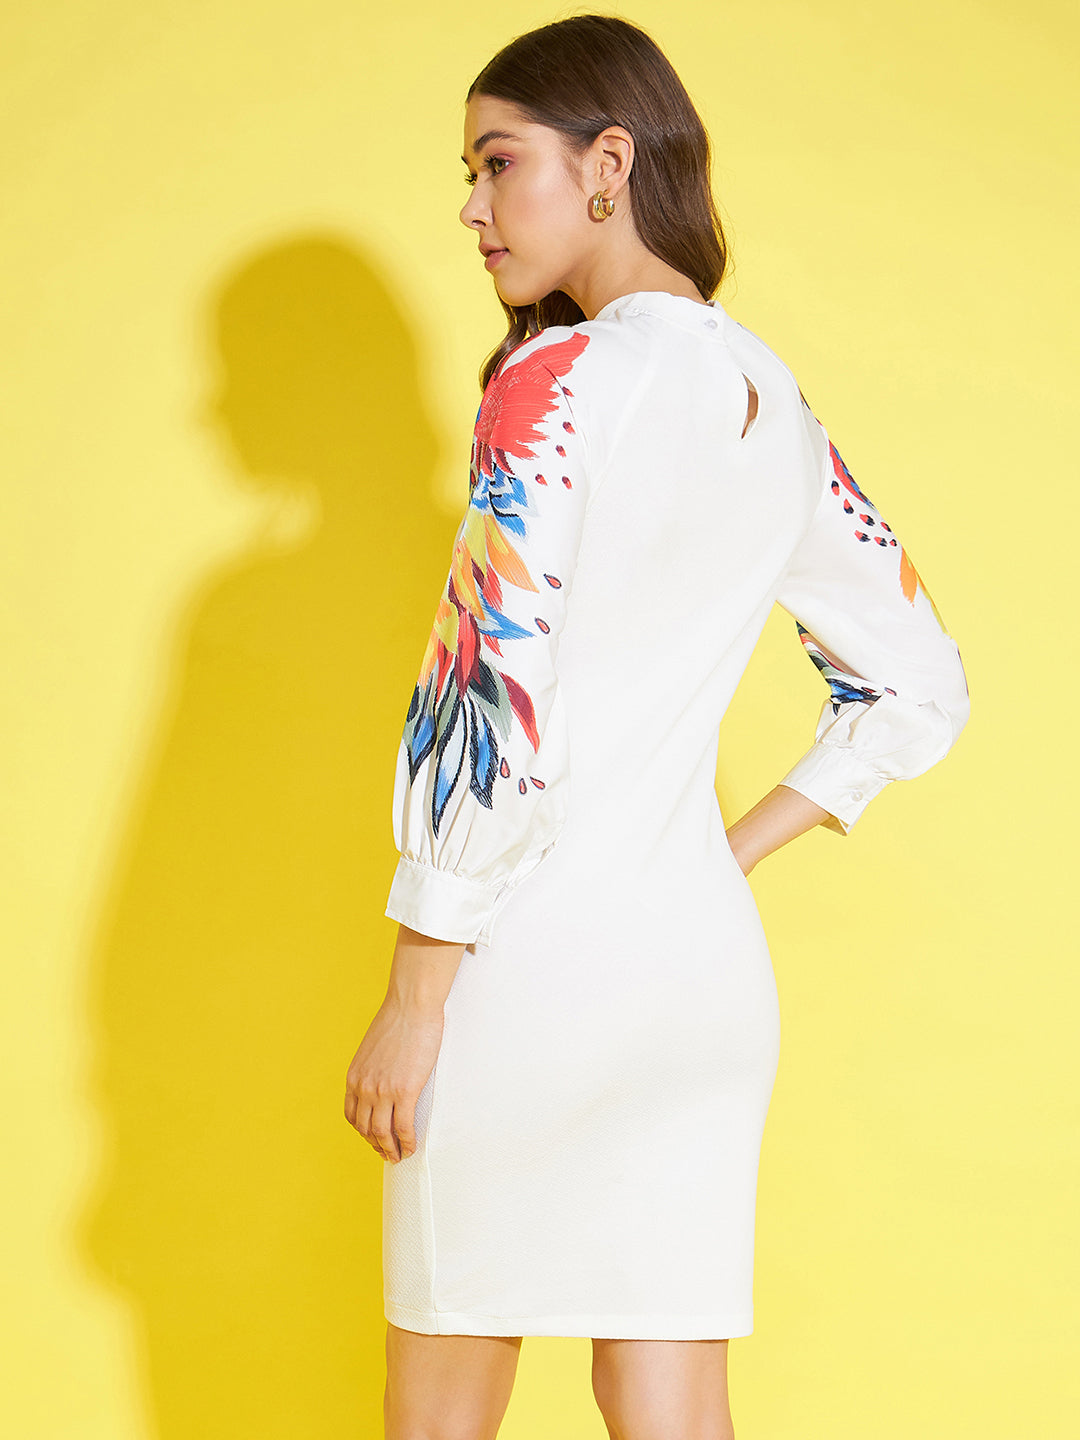 StyleStone Women's White Bodycon Dress with Multi Coloured Printed Sleeves